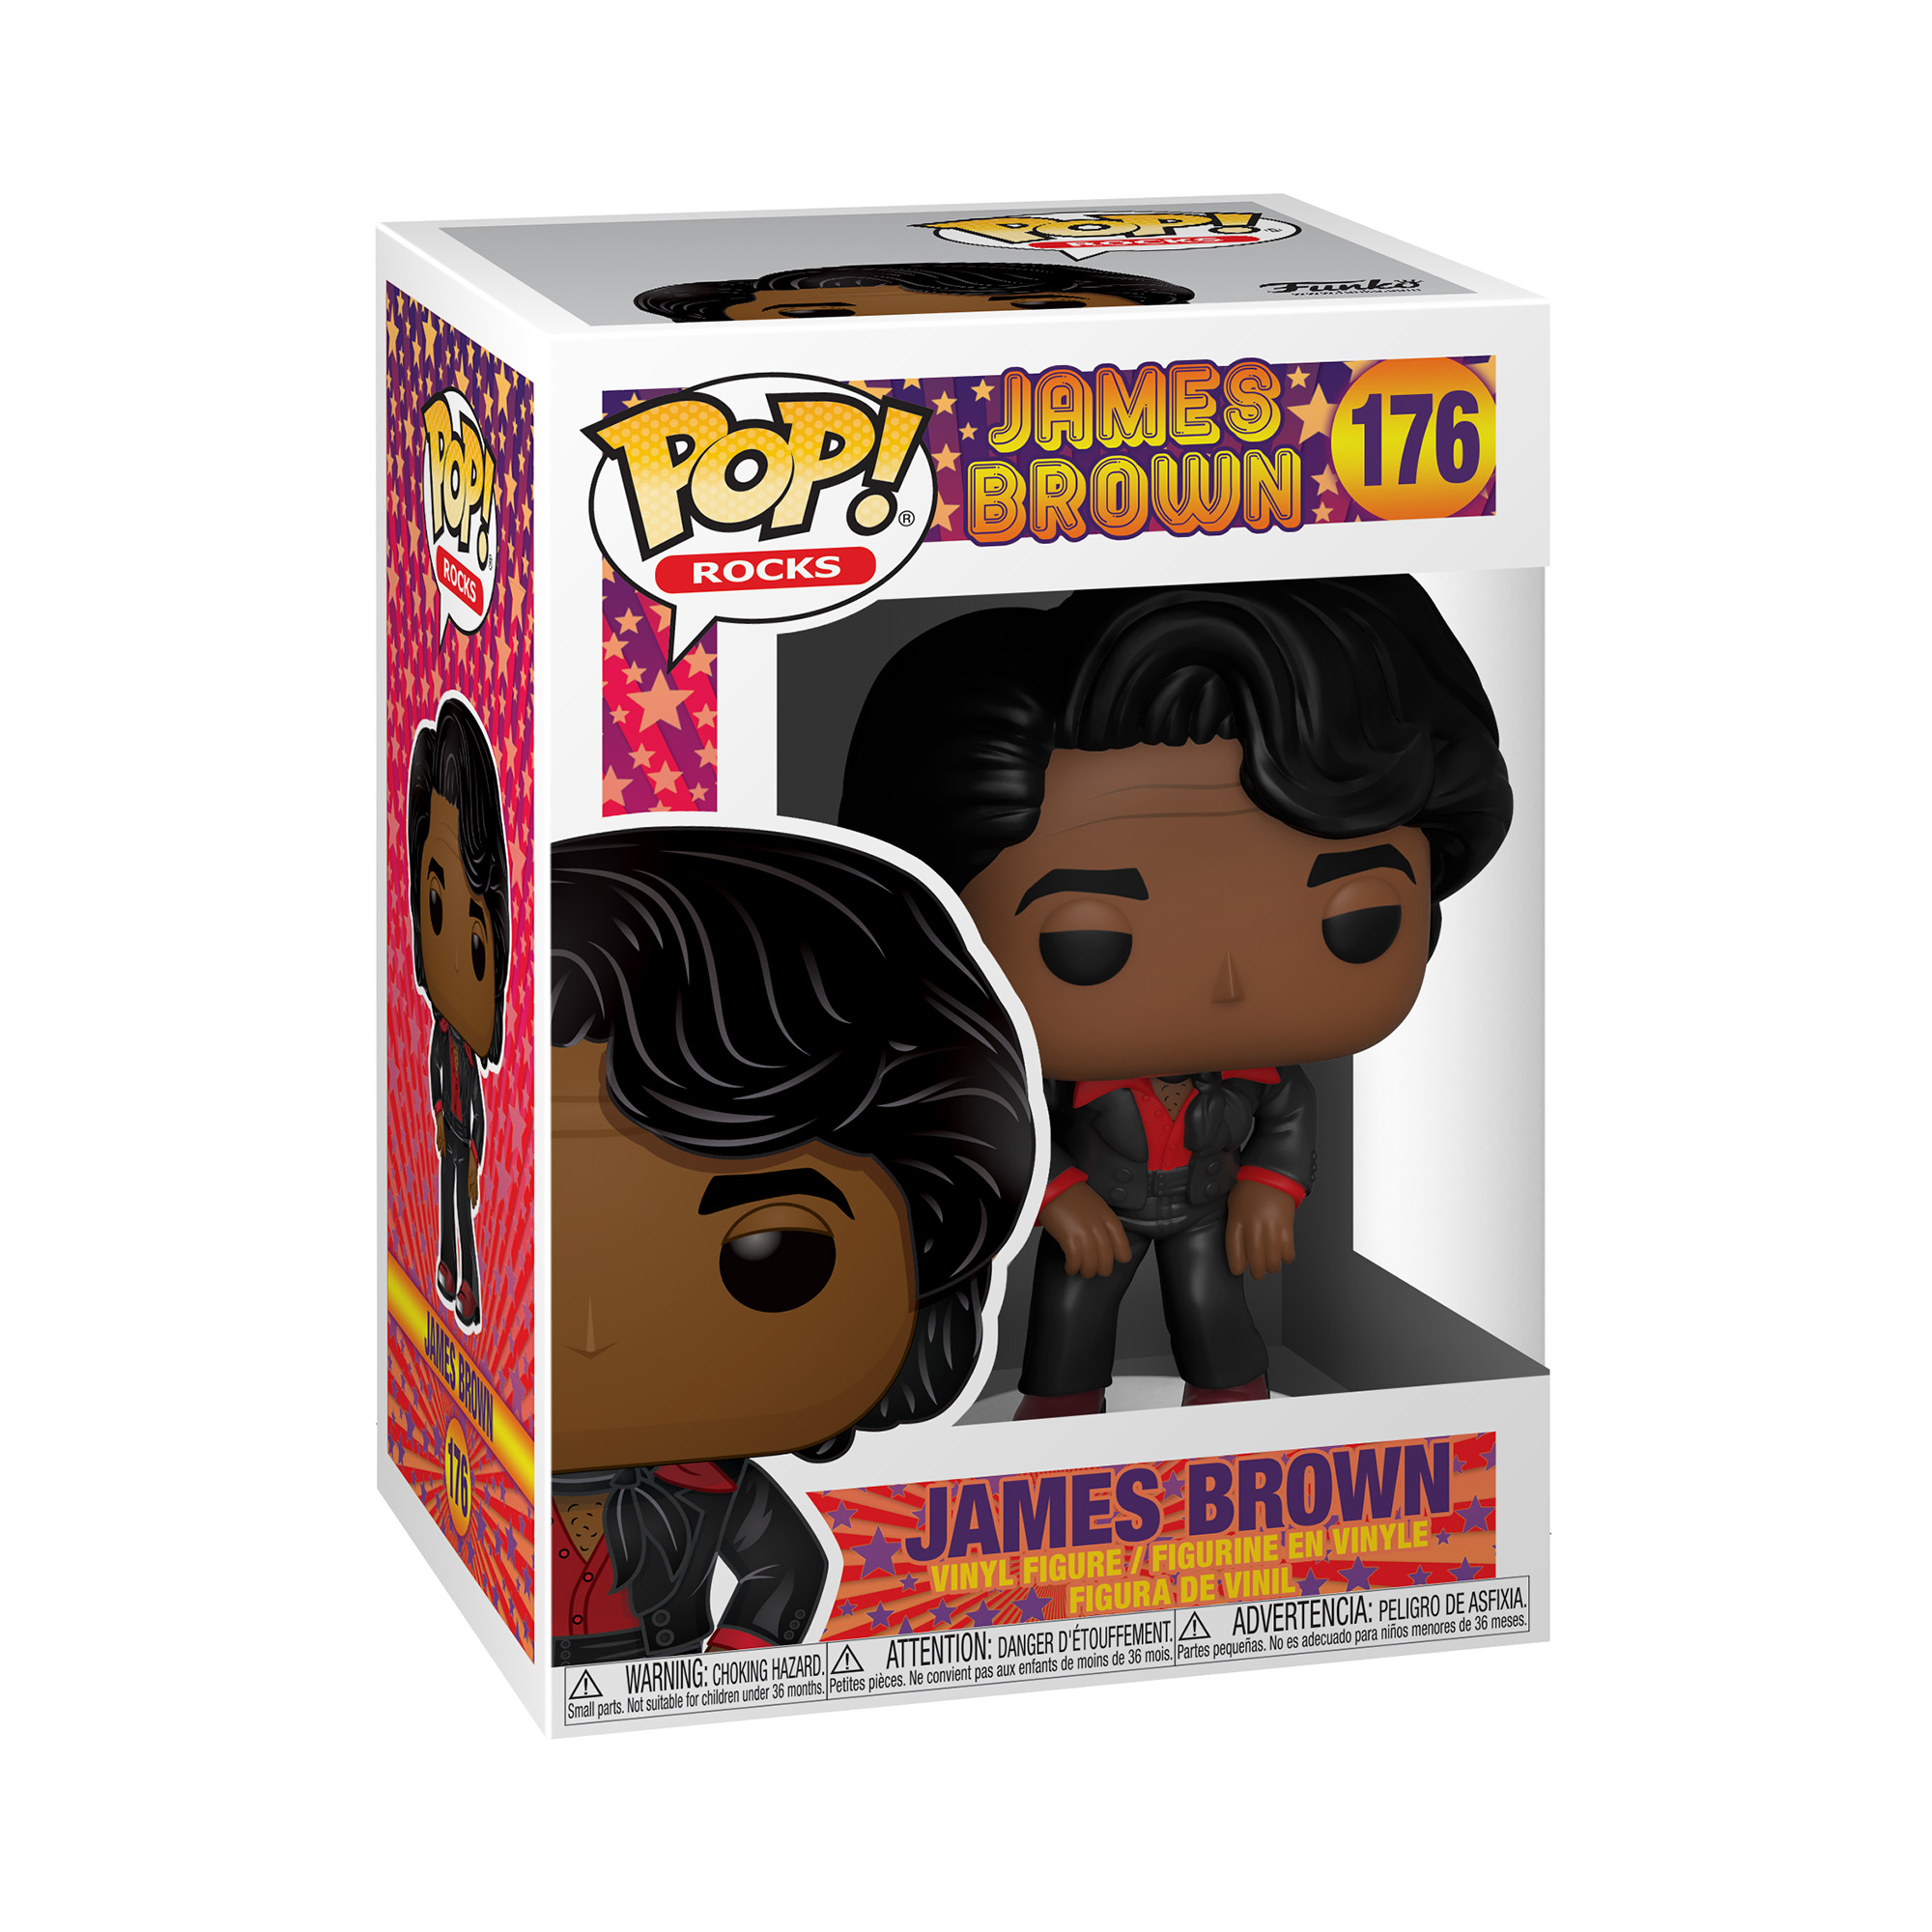 Pop! James Brown in Box